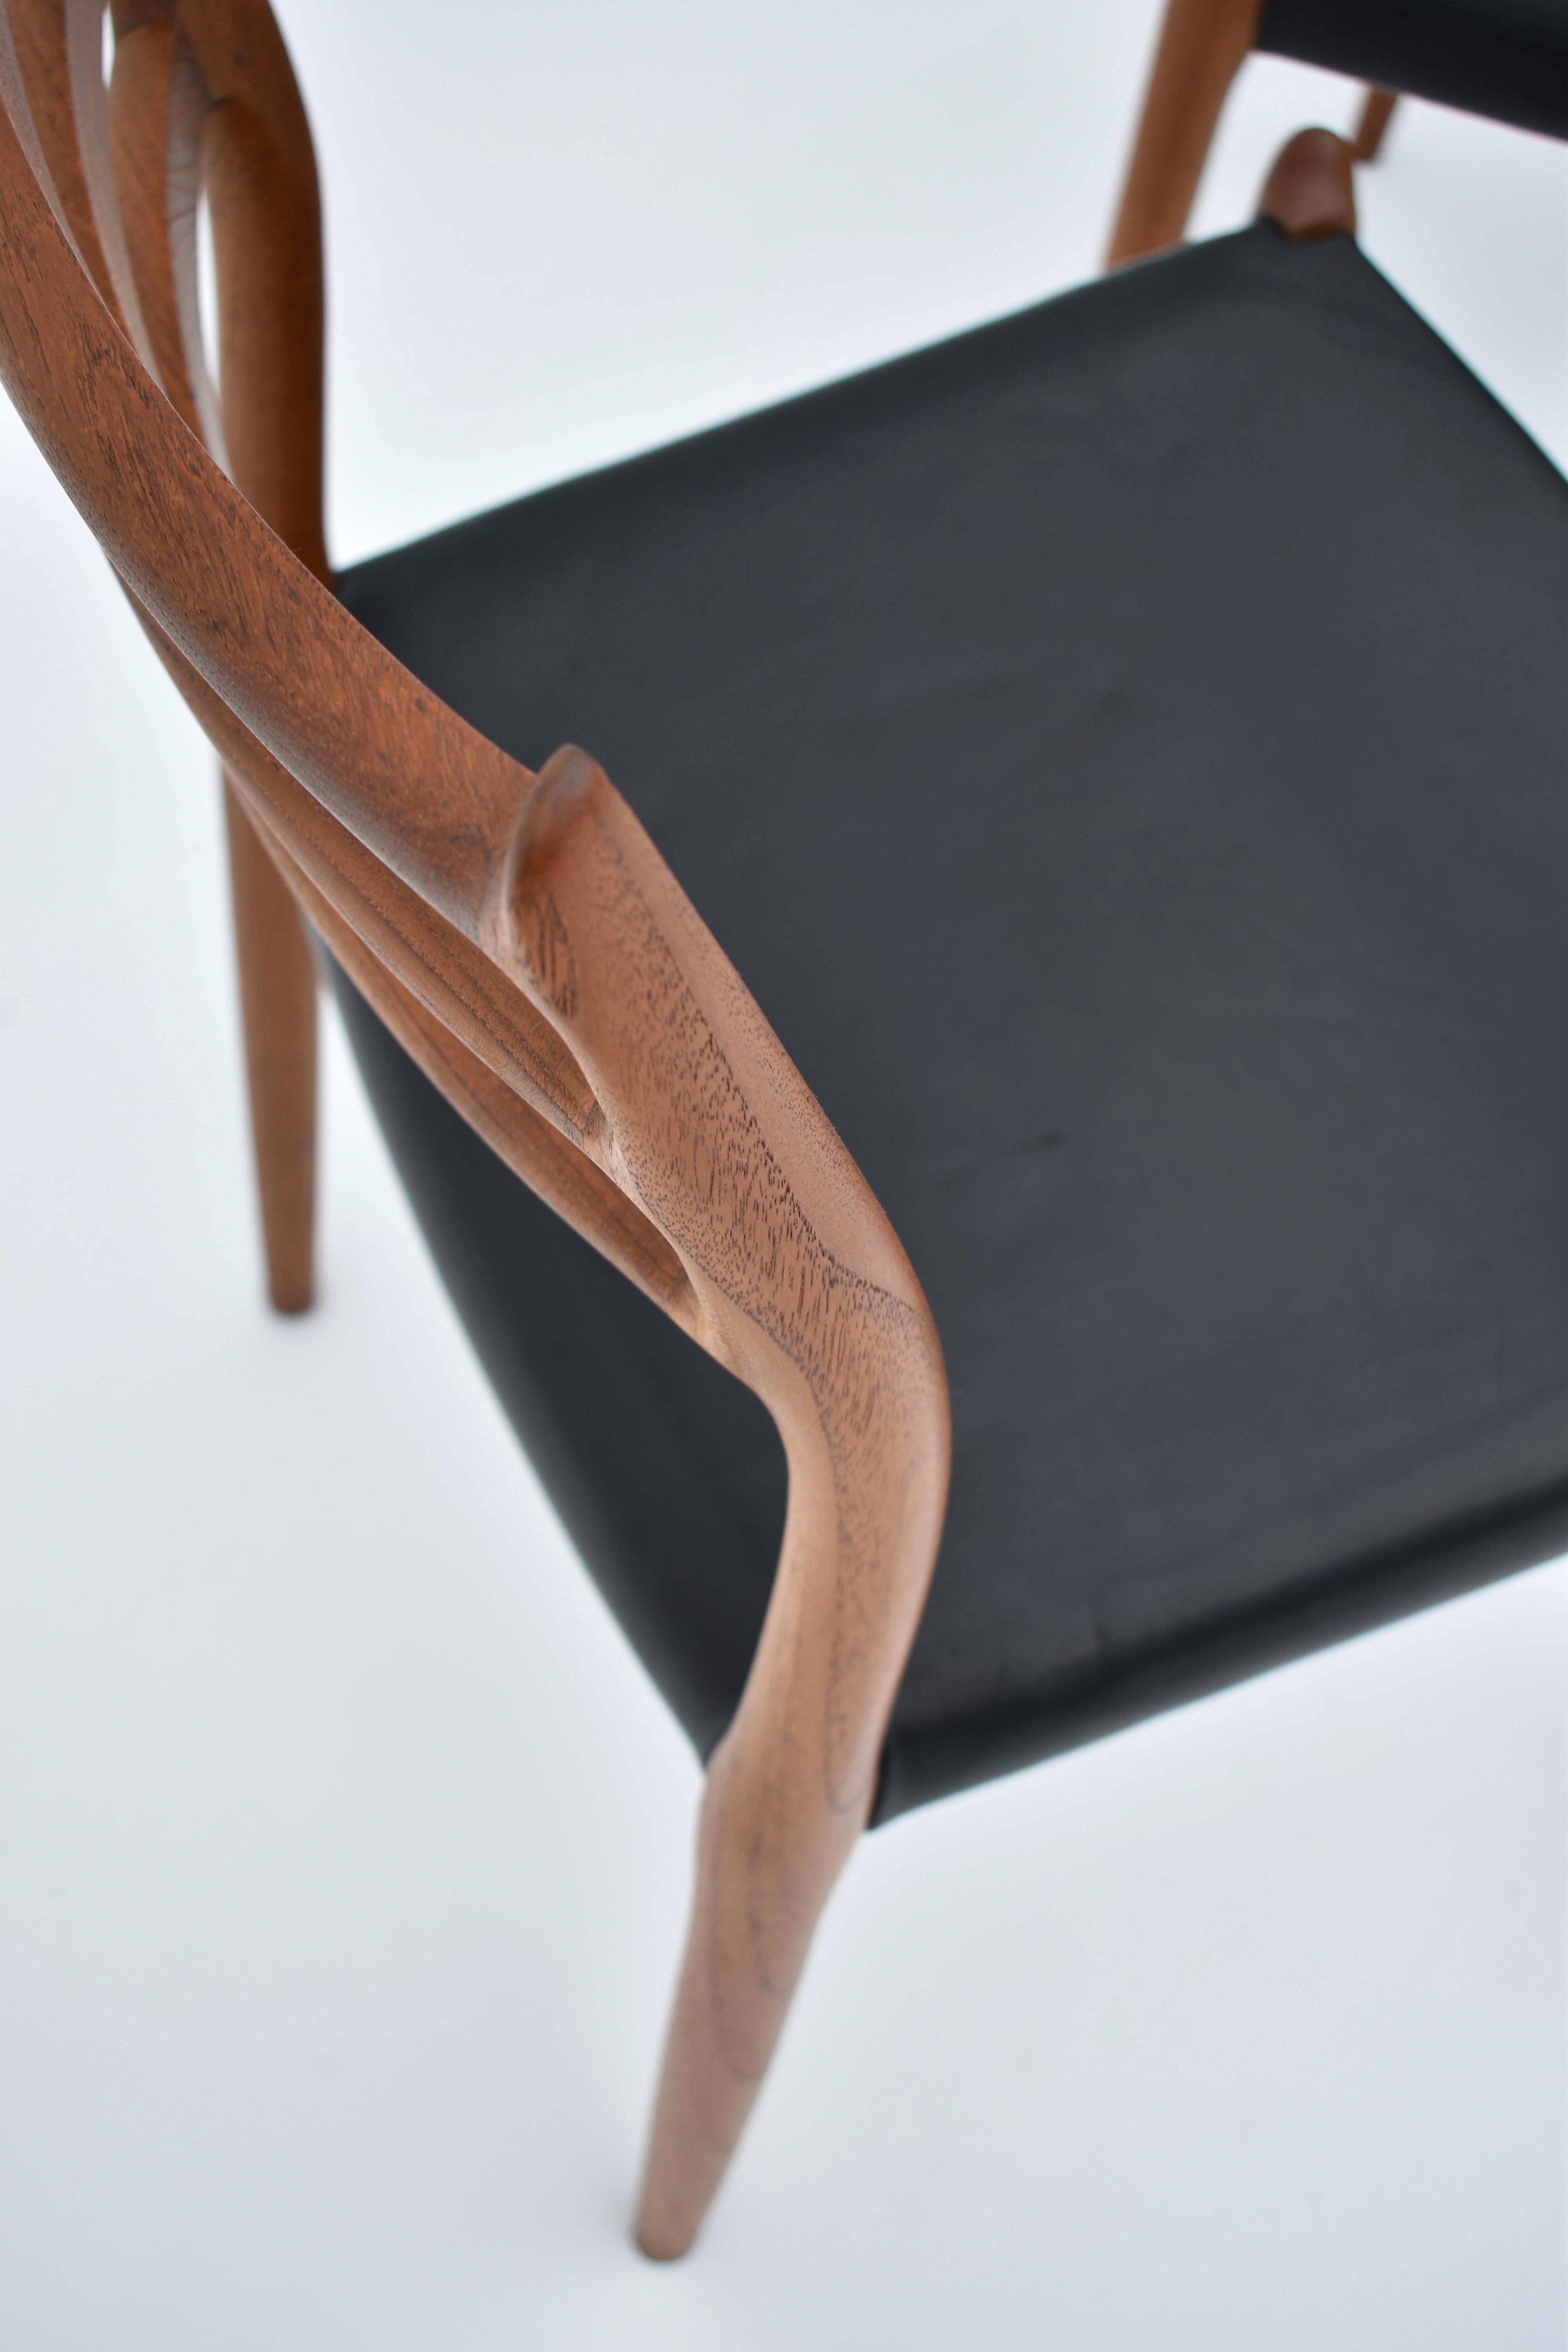 Scandinavian Modern Niels Moller Model 78 Teak Dining Chairs for J L Mollers Mobelfabrik